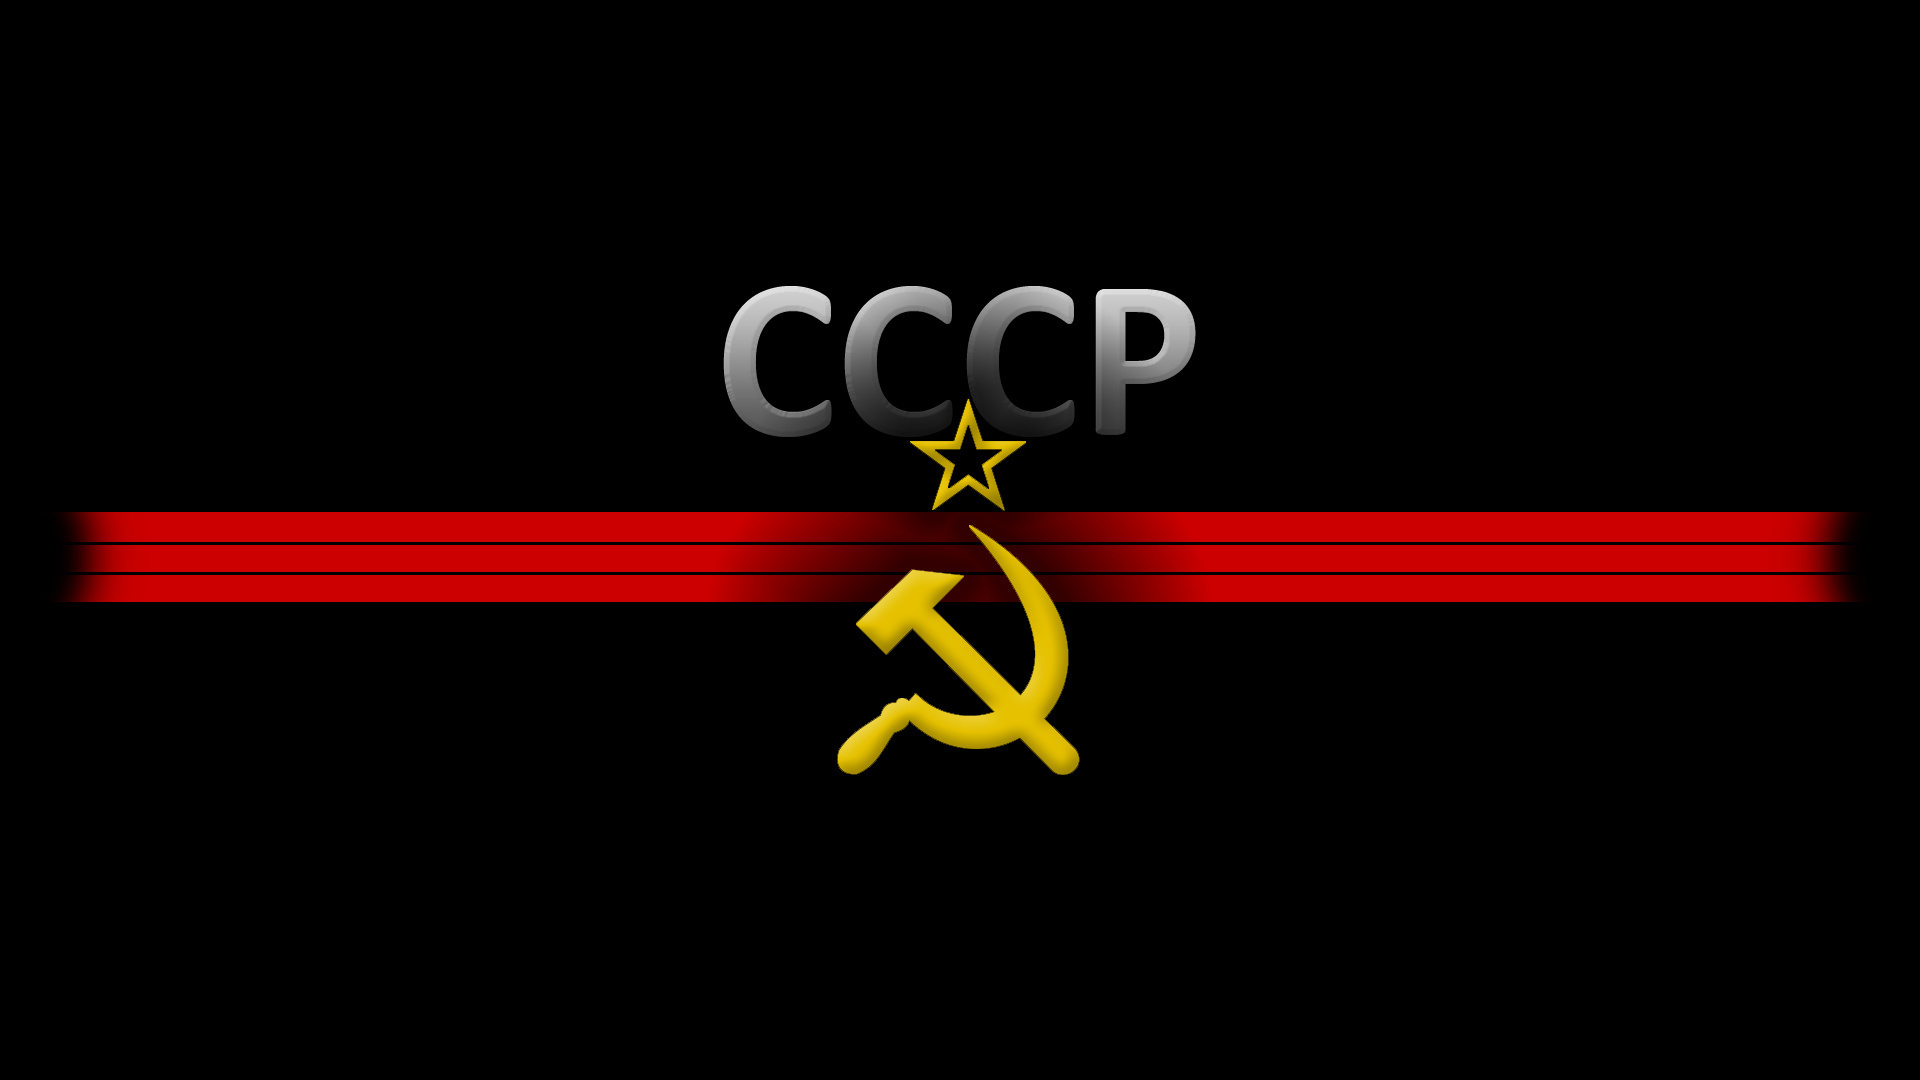 Ussr Wallpaper Soviet union w